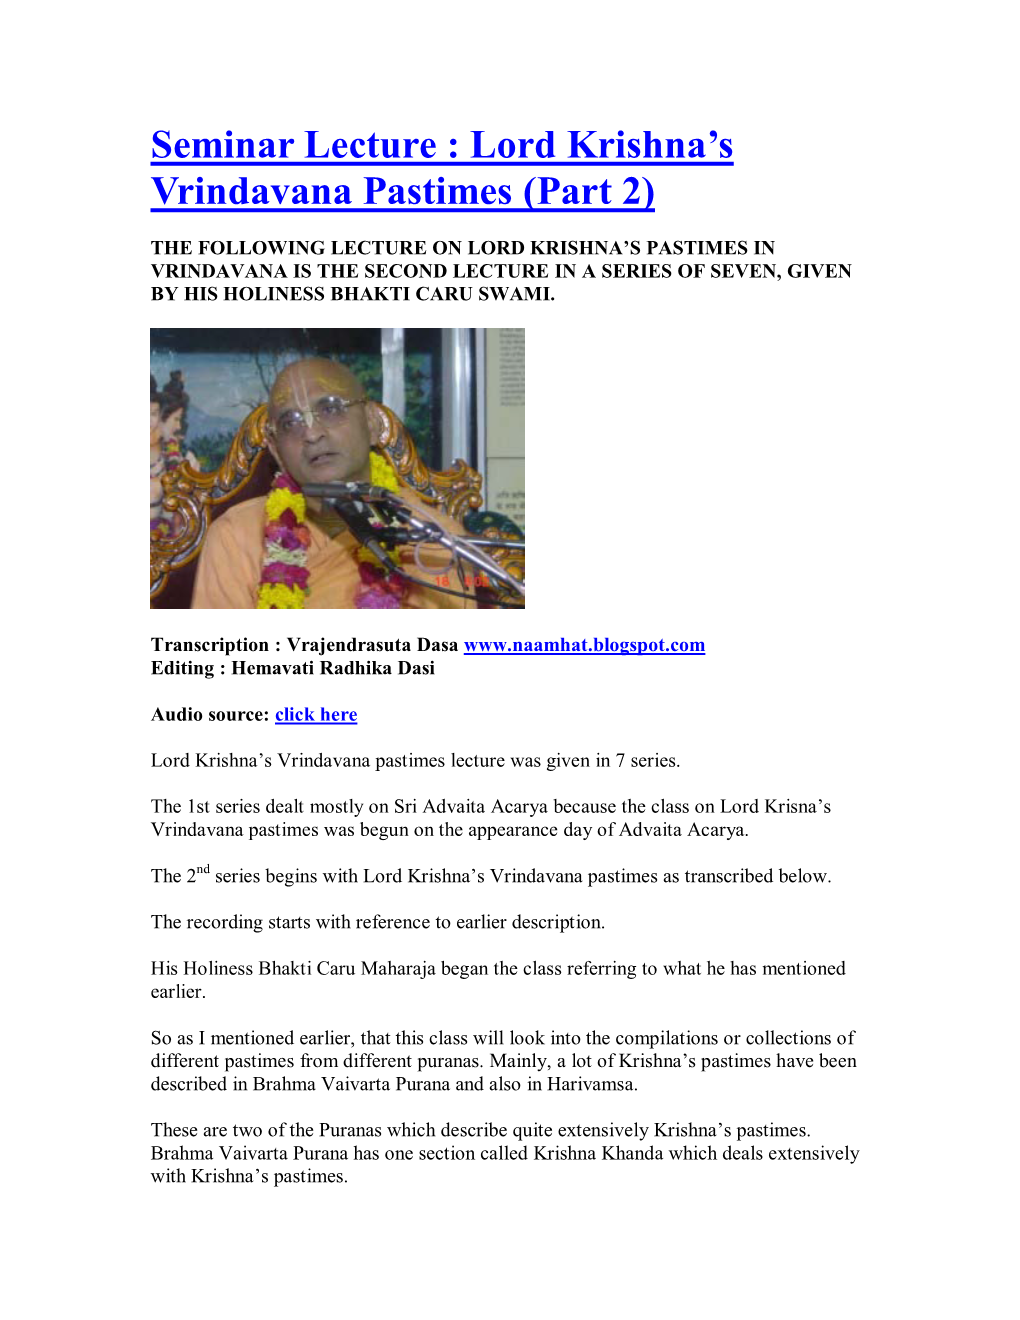 Lord Krishna's Vrindavana Pastimes